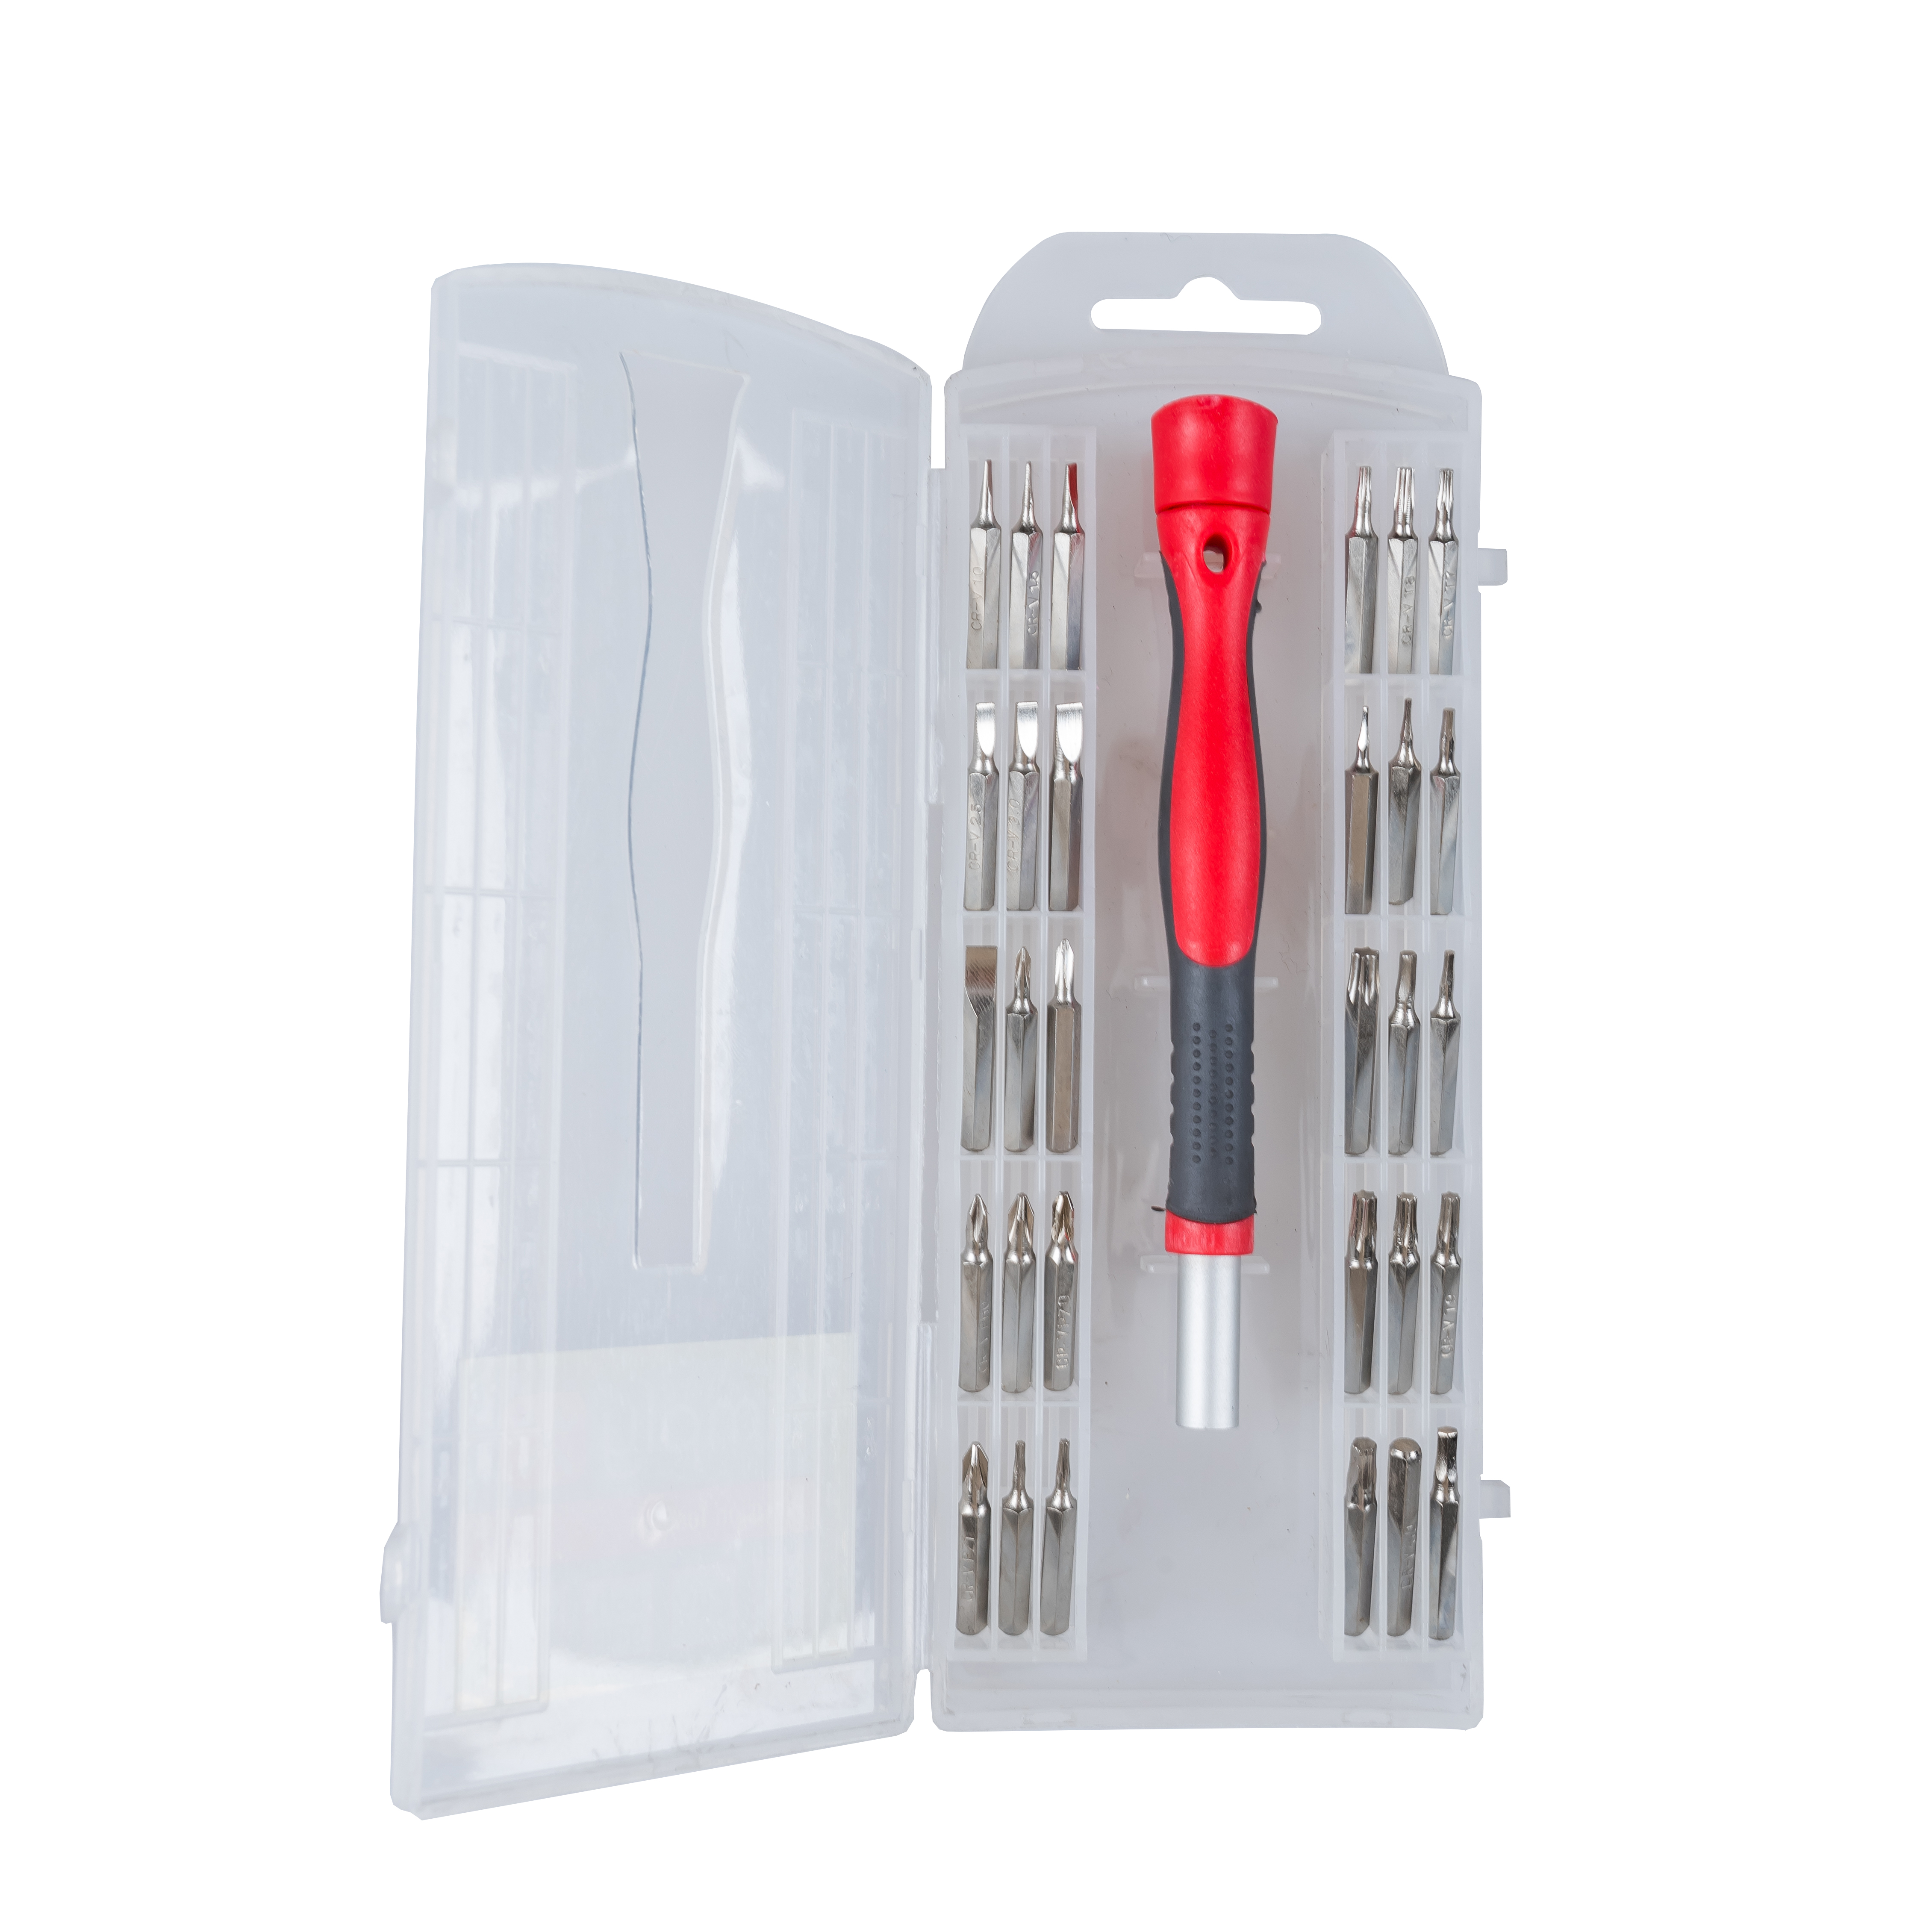 060720-01CL 31pc precision screwdriver kit